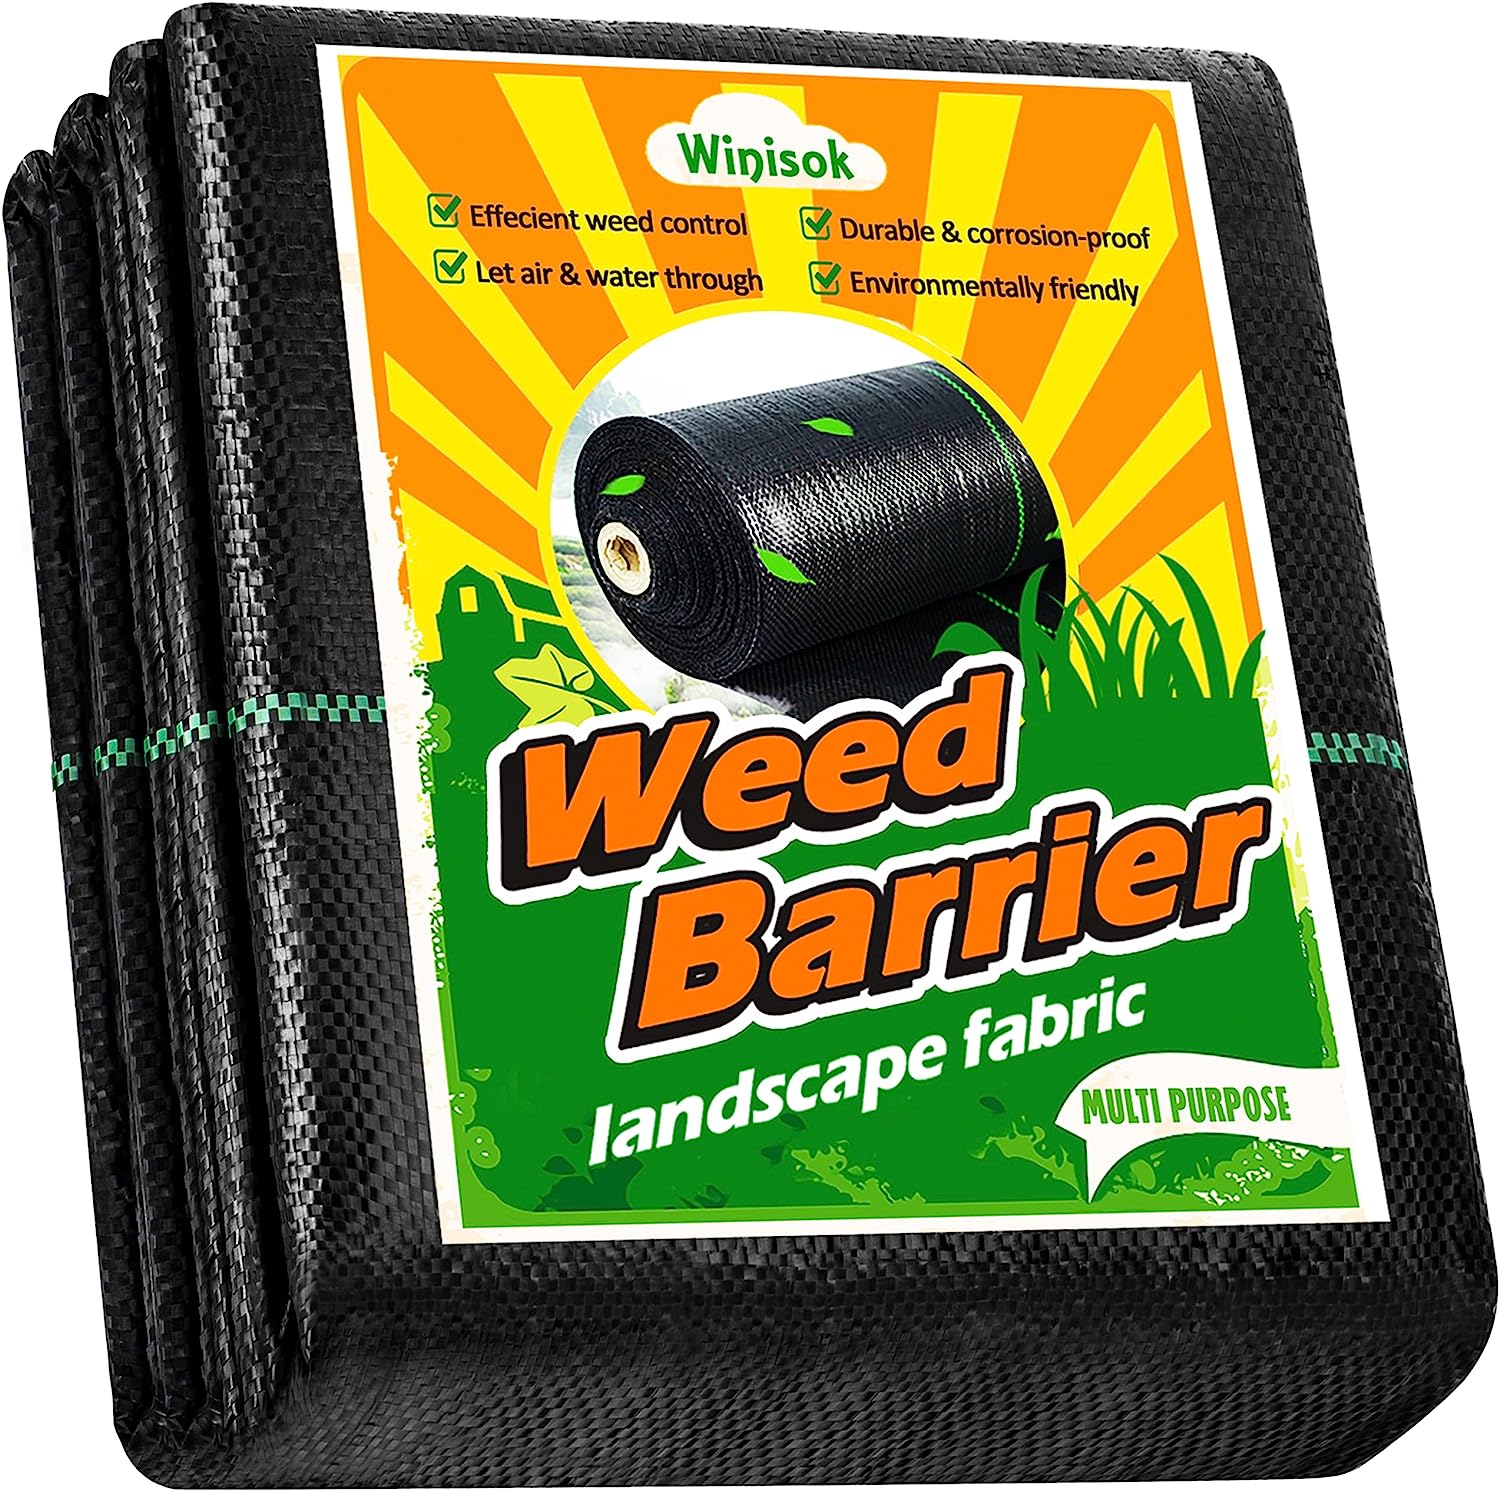 Winisok Weed Barrier Landscape Fabric Heavy Duty, 4FT [...]